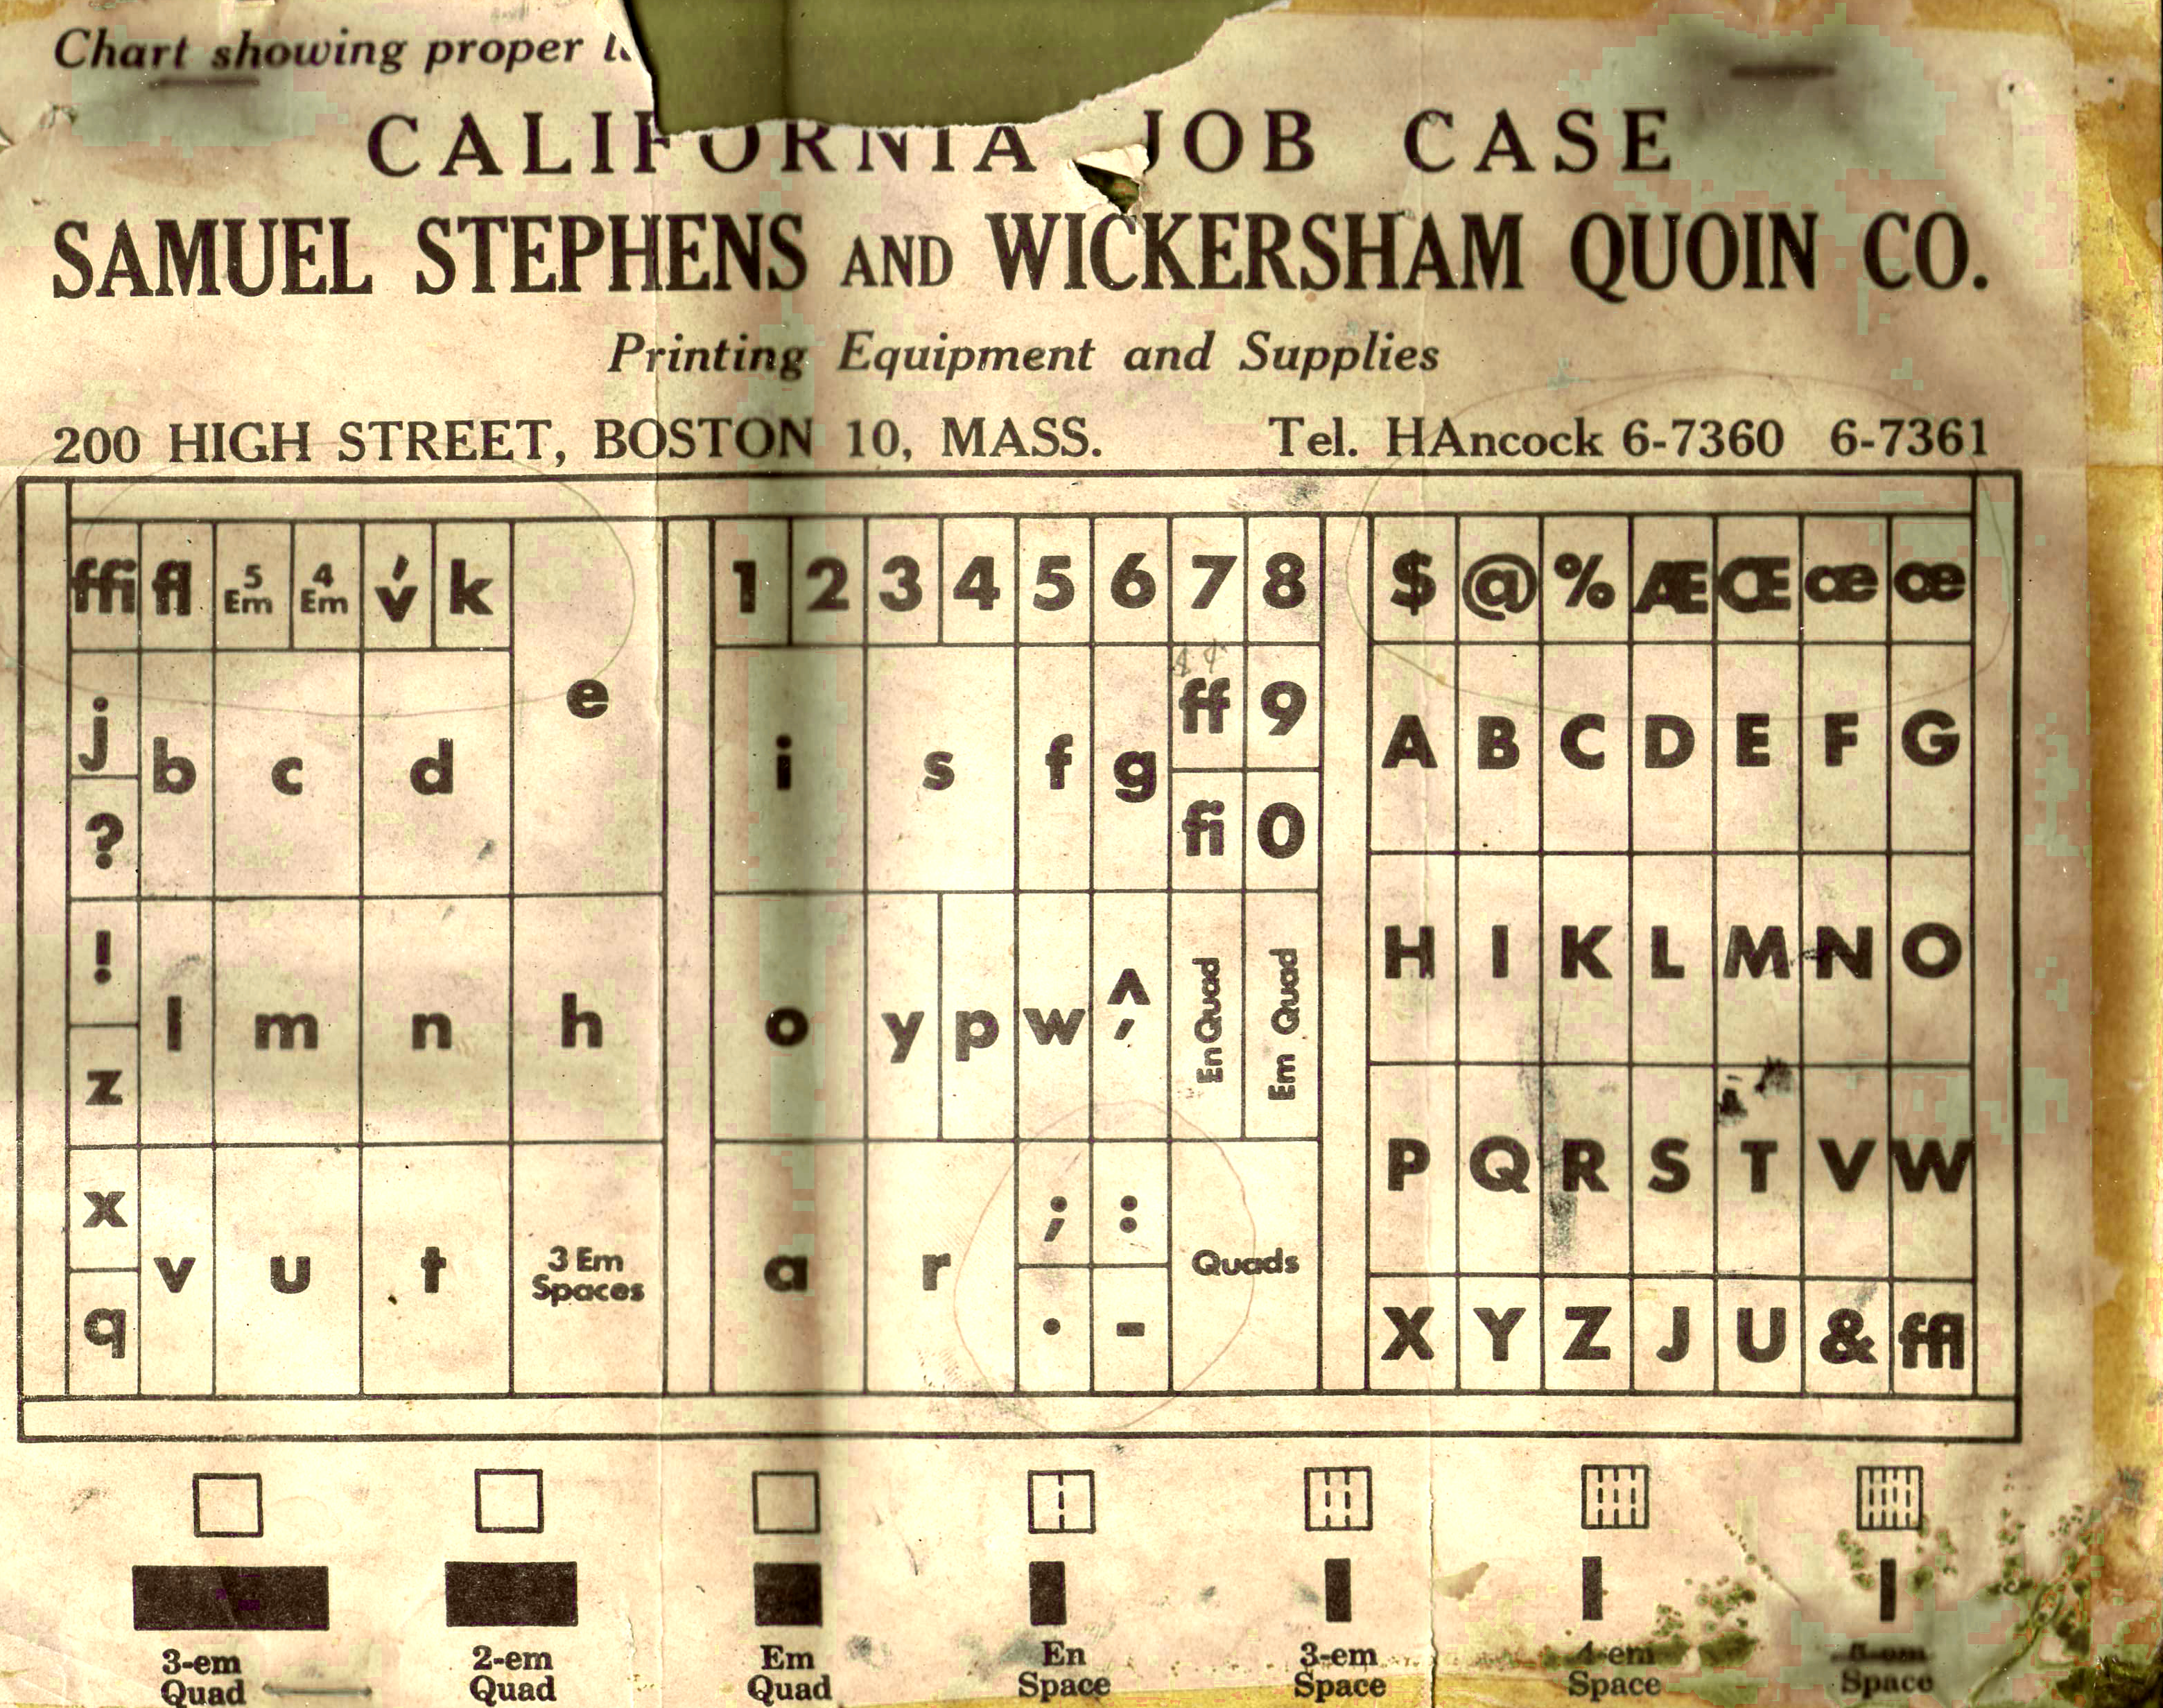 Stephens & Wickersham Quoin
                  Company Job Case Chart